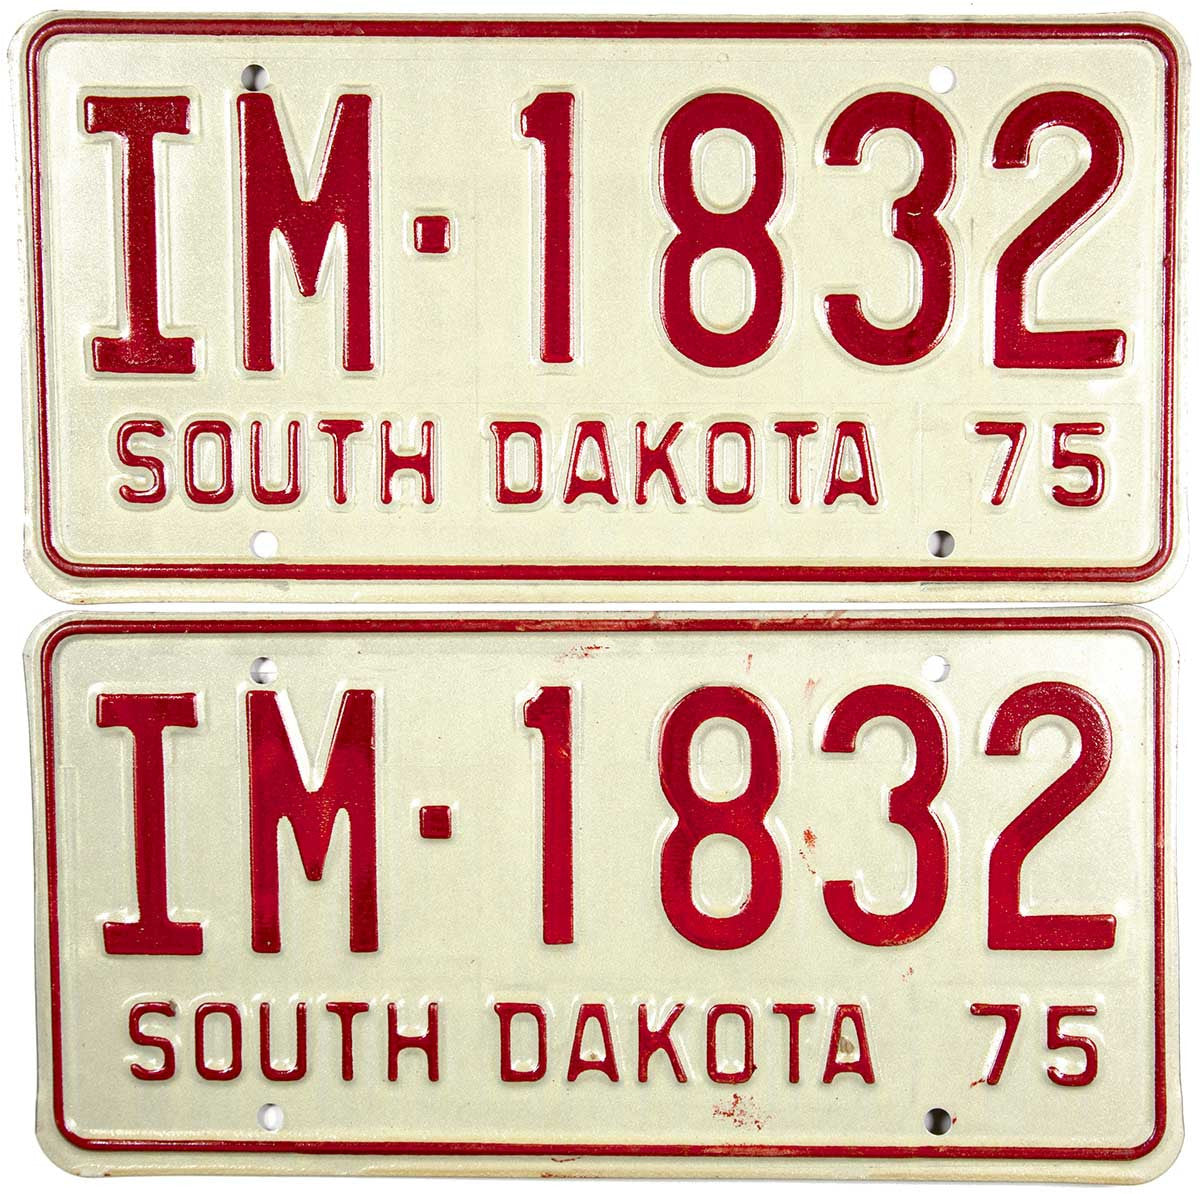 1975 South Dakota Implement License Plates